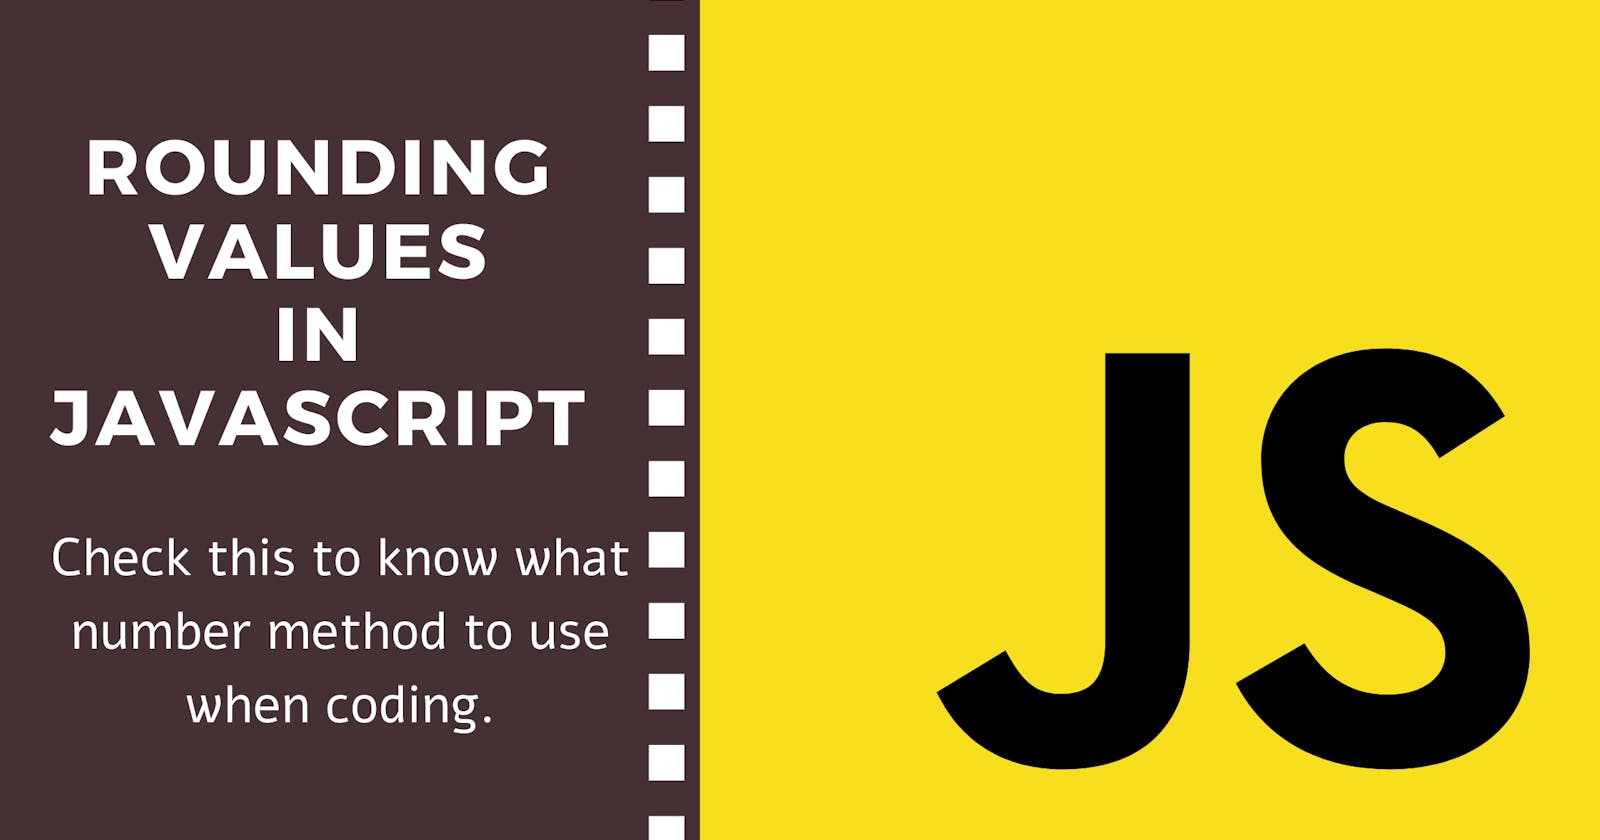 Rounding values in Javascript